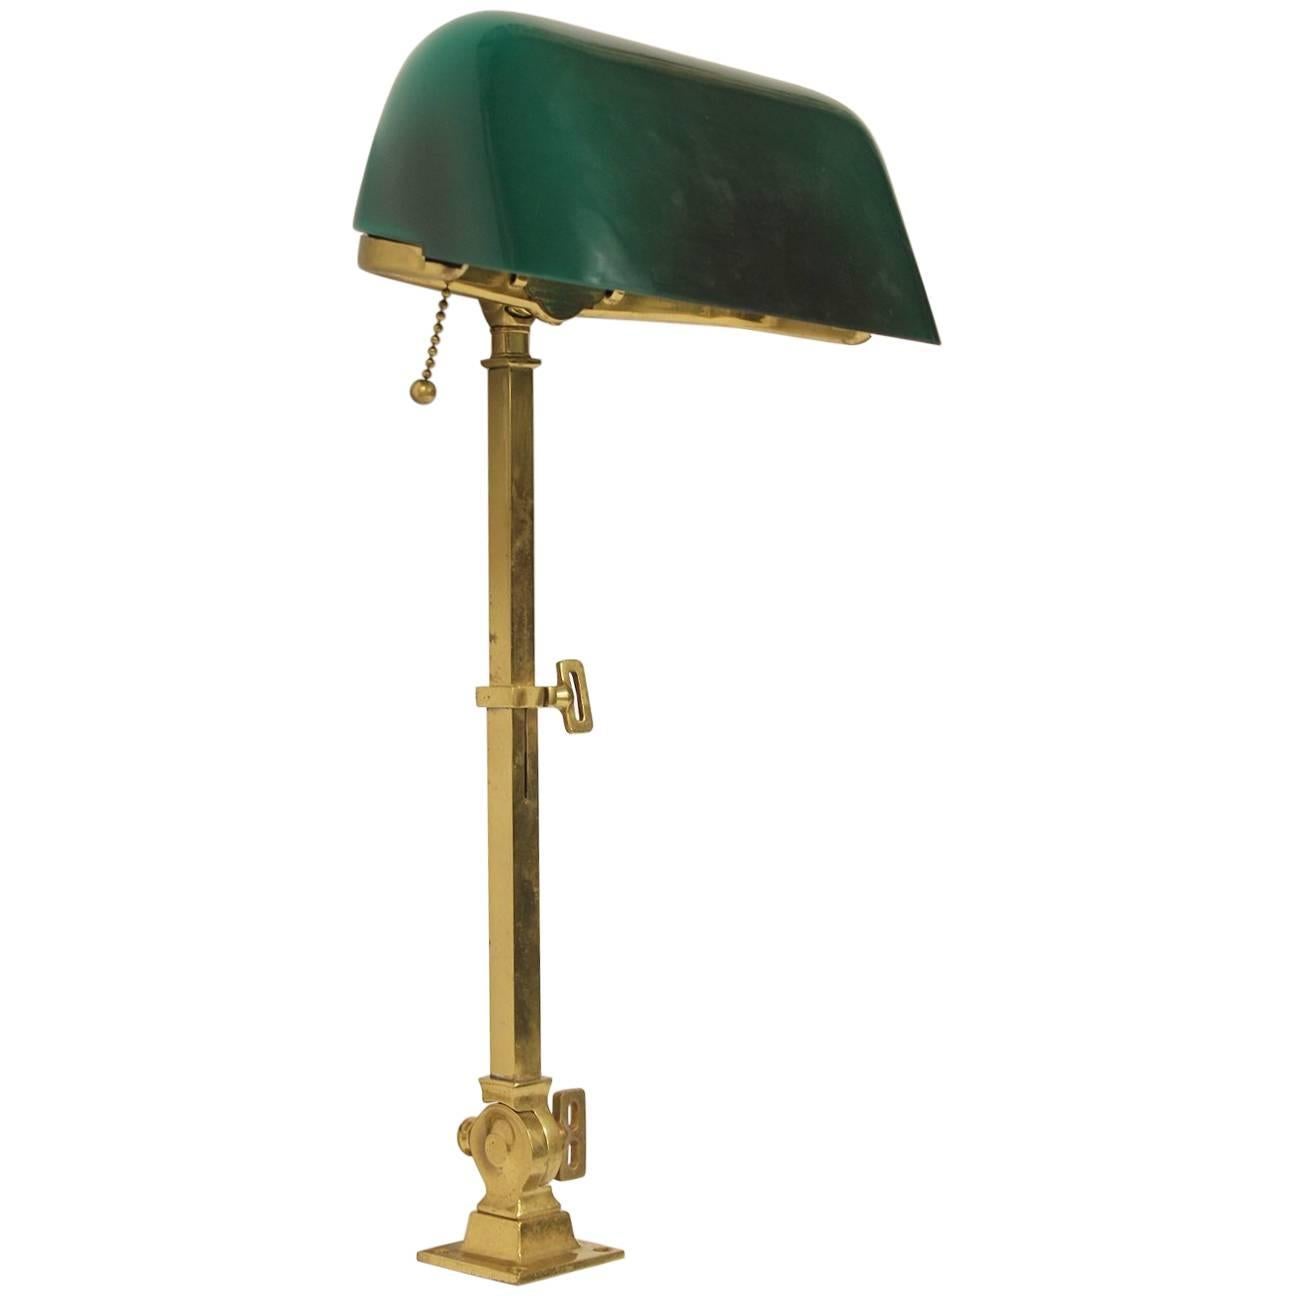 Rare 1920s American Emeralite Brass Adjustable Desk Lamp by H.G. McFaddin & Co For Sale